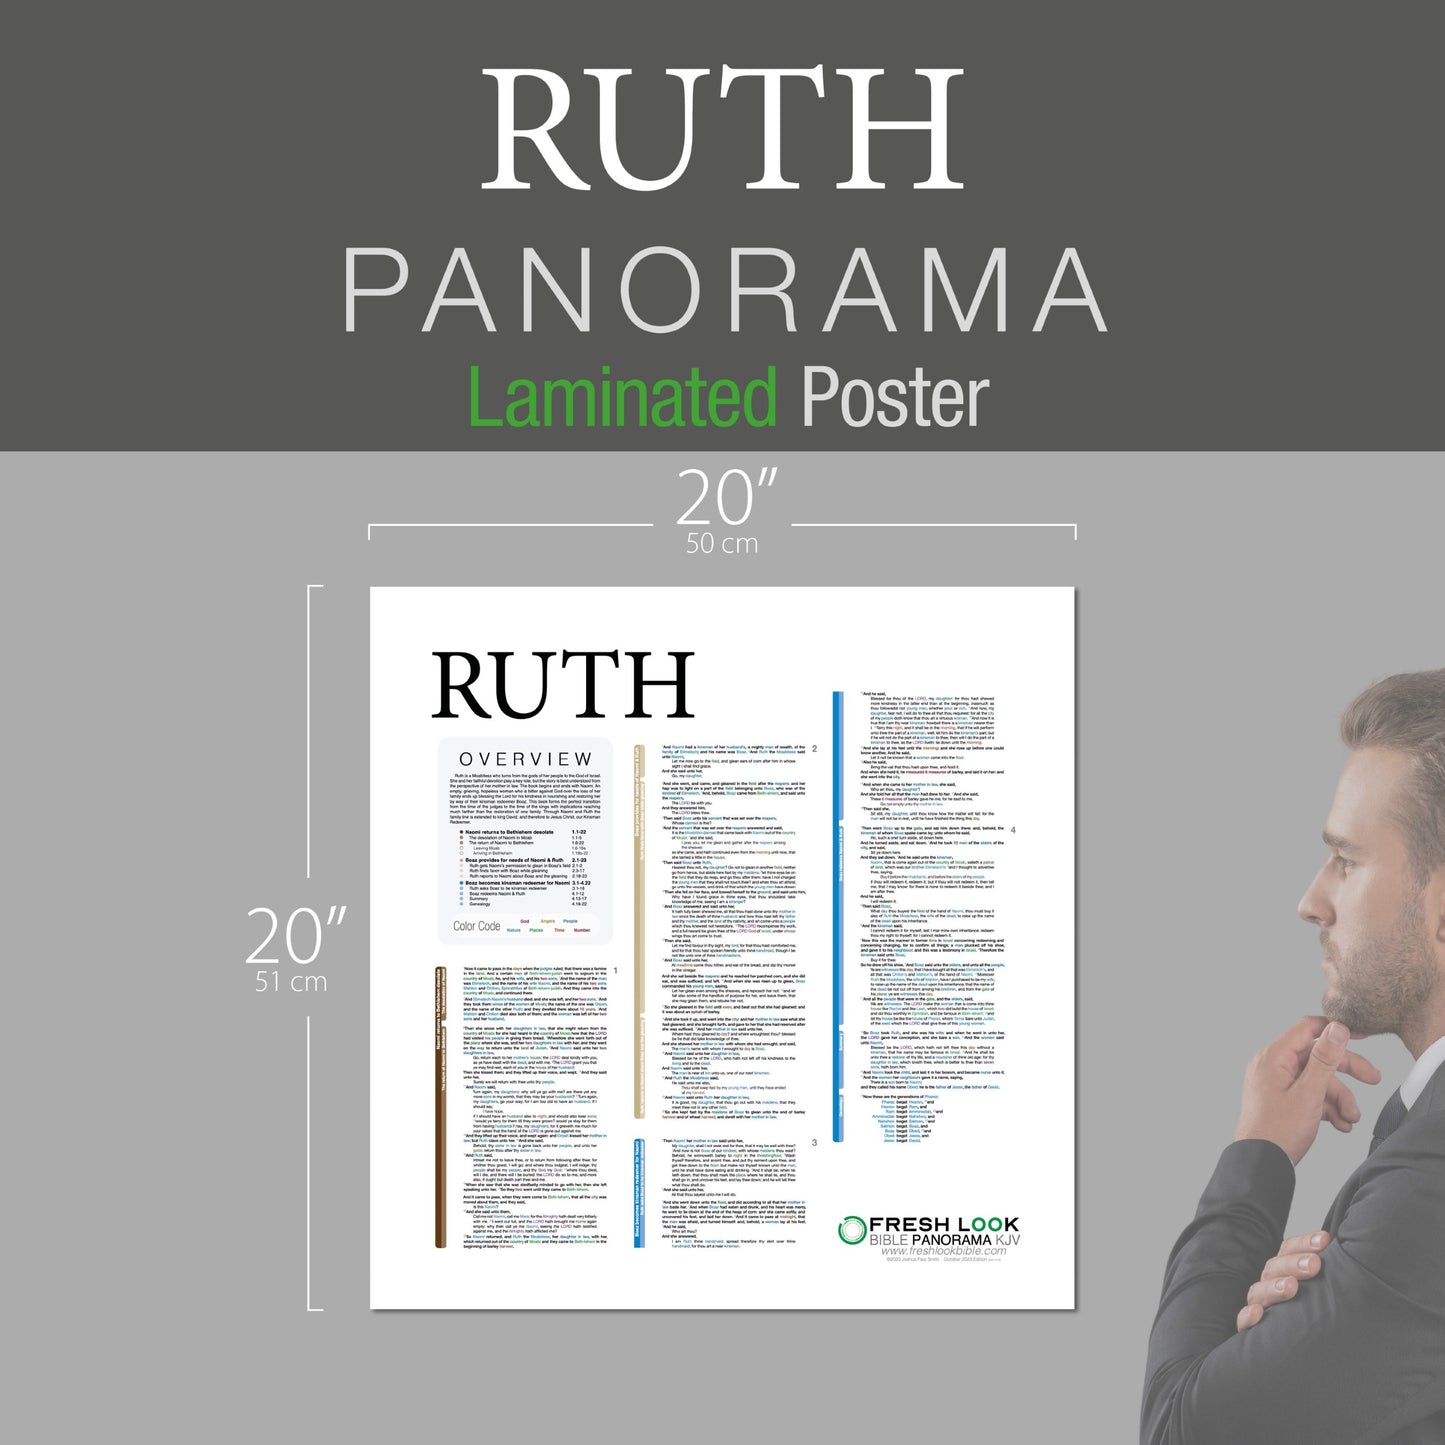 Ruth Panorama Laminated